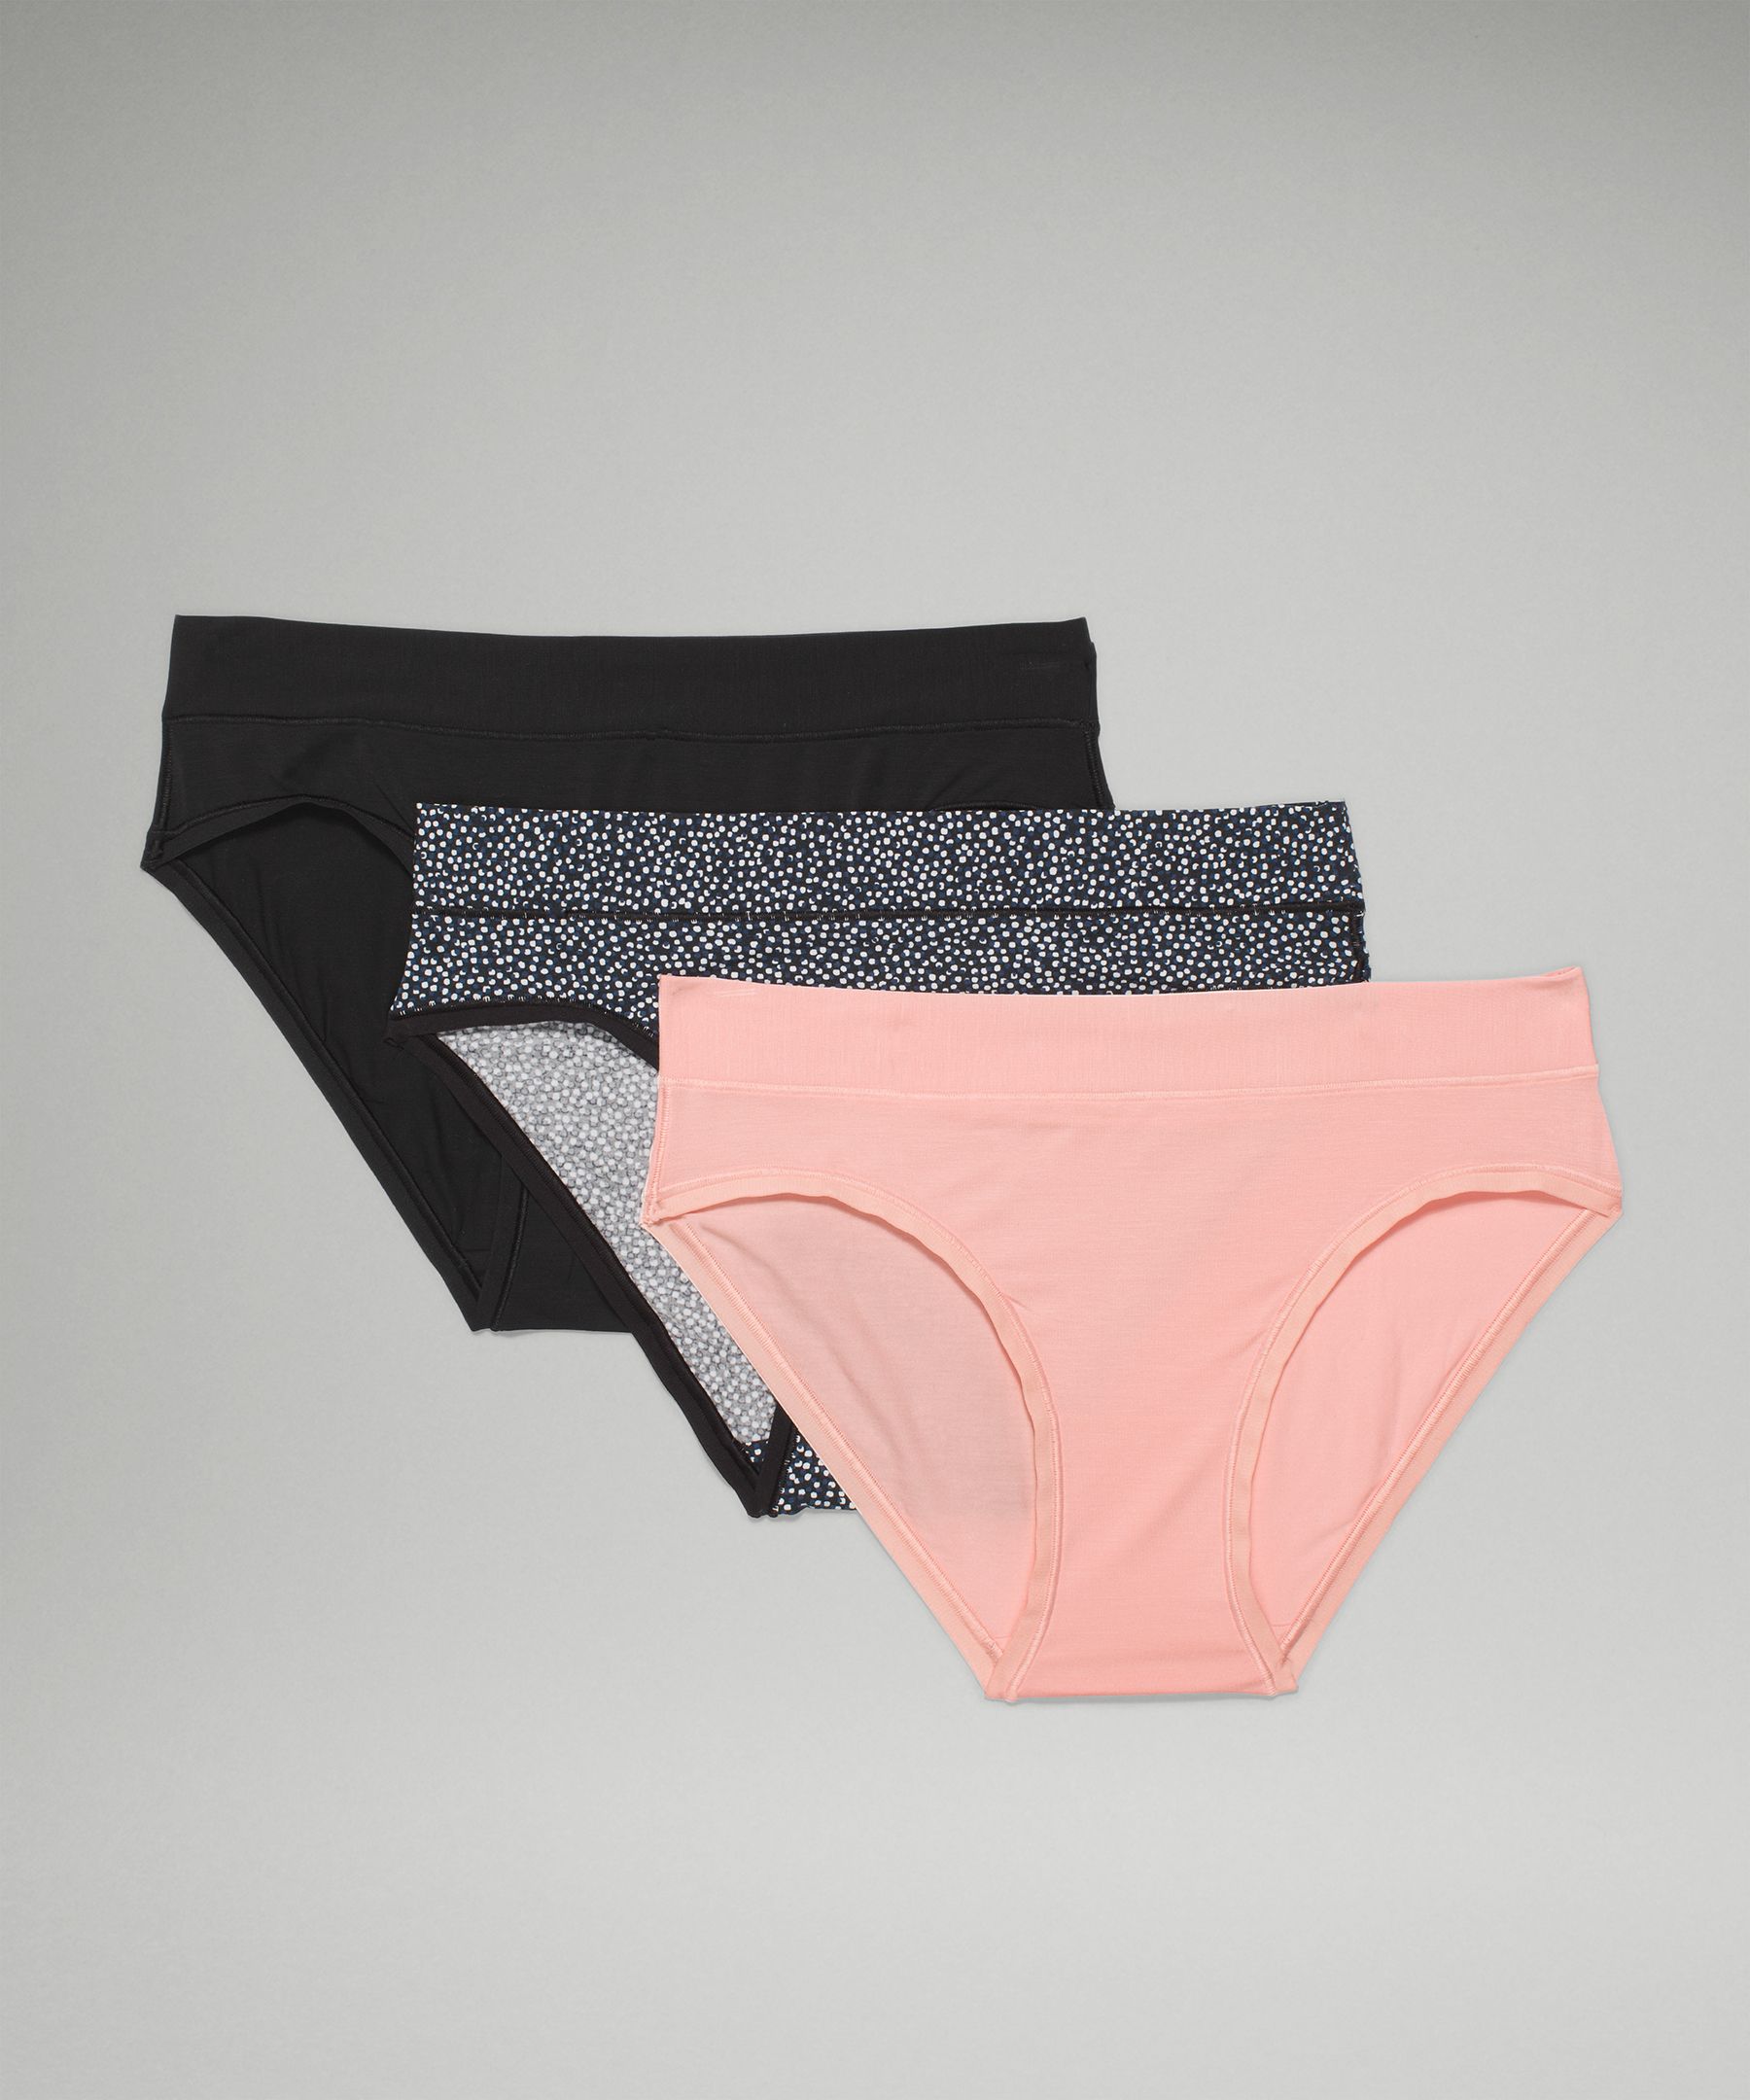 Lululemon Underease Mid Rise Bikini Underwear 3 Pack In Black/pink Mist/double Dimension Starlight Black